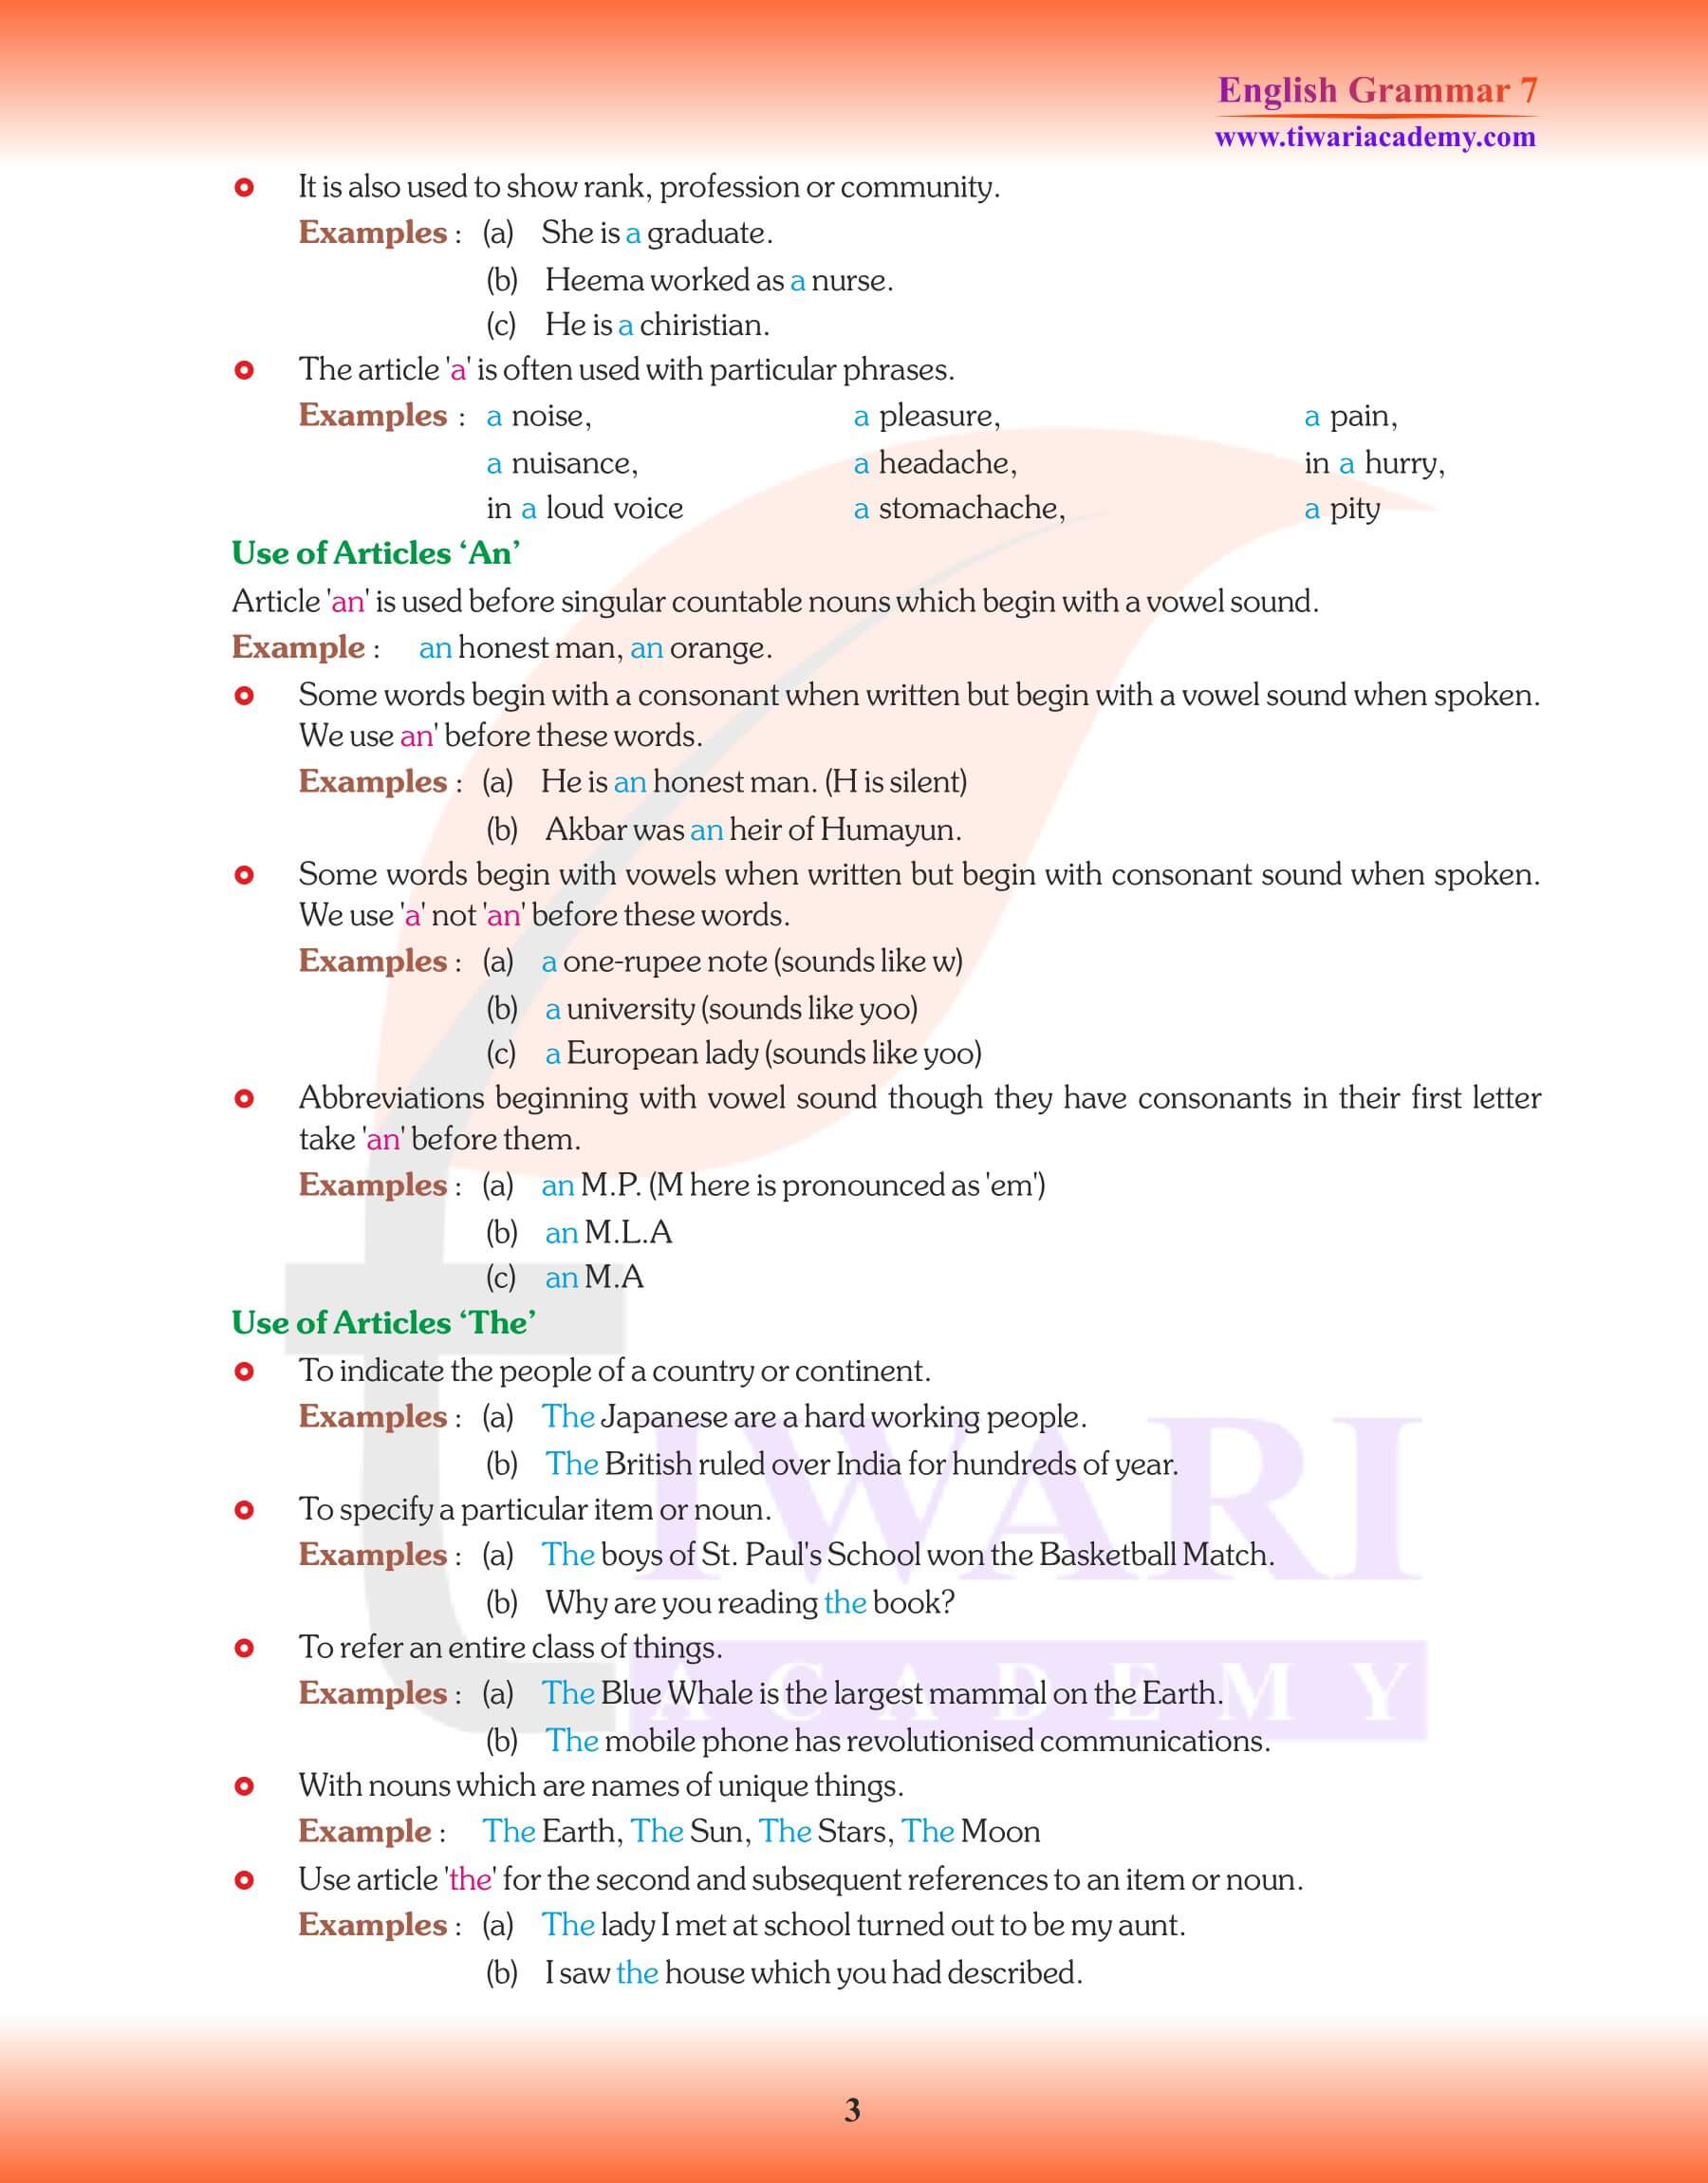 Class 7 English Grammar Chapter 6 Notes